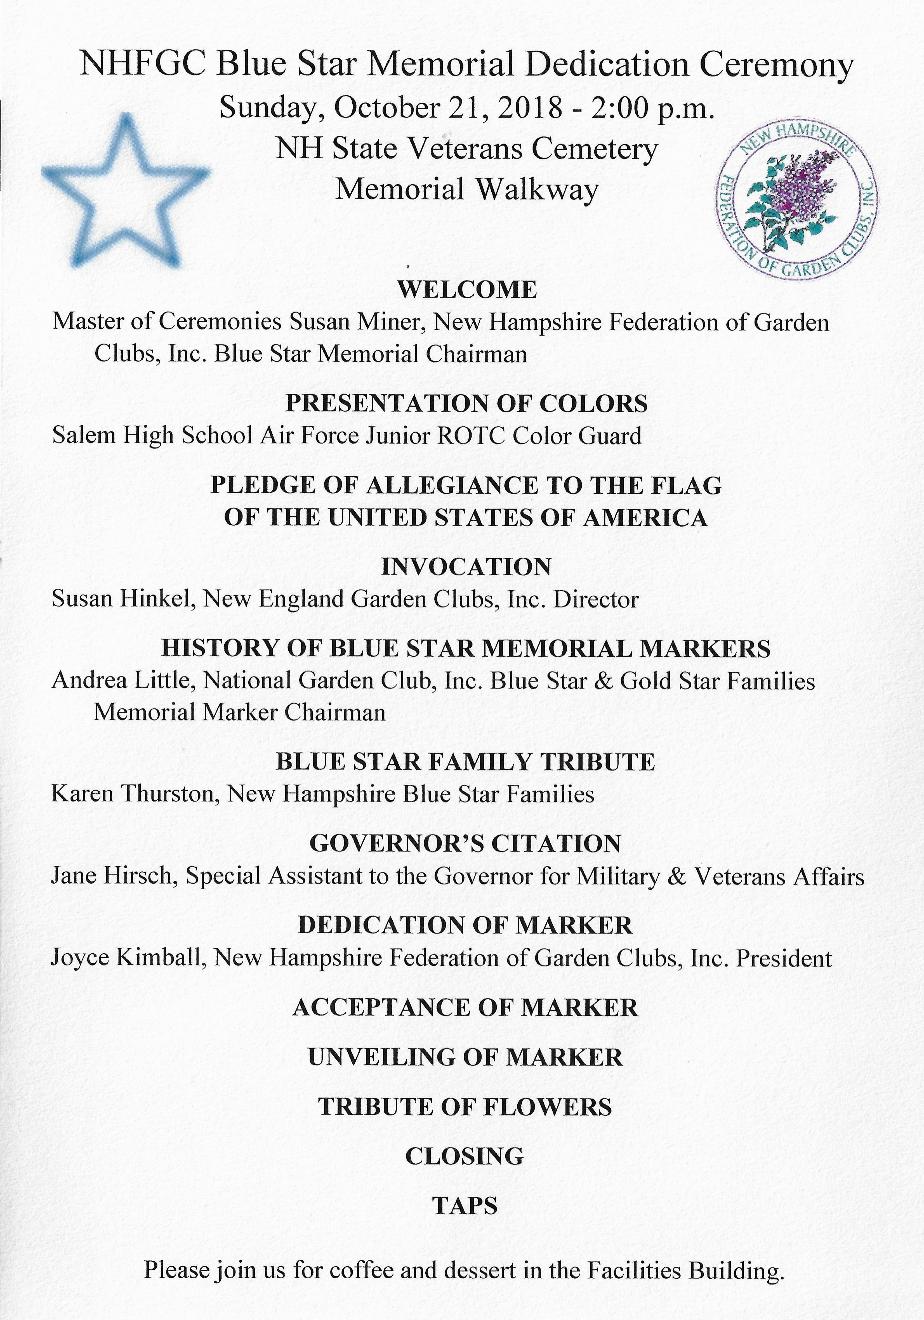 Blue Star Memorial Dedication - NH State Veterans Cemetery